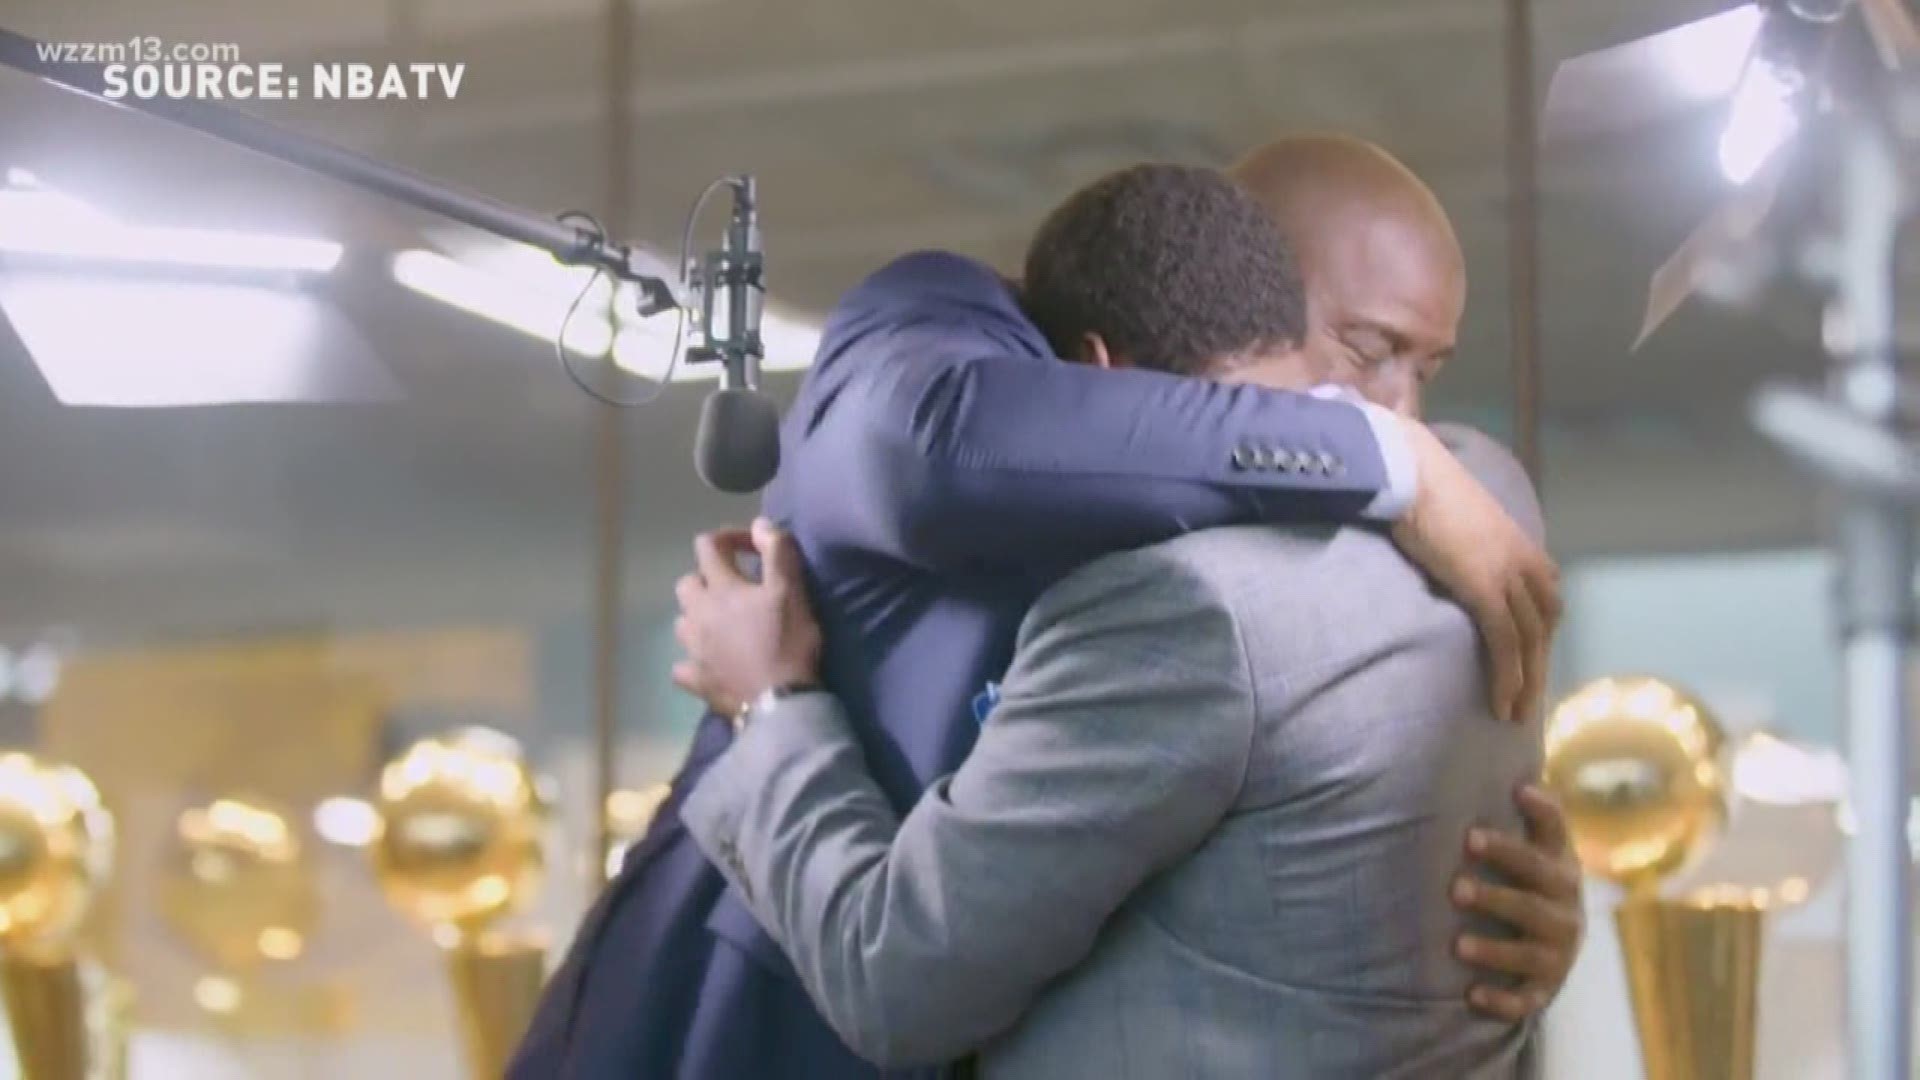 Emotional moment on NBA-TV